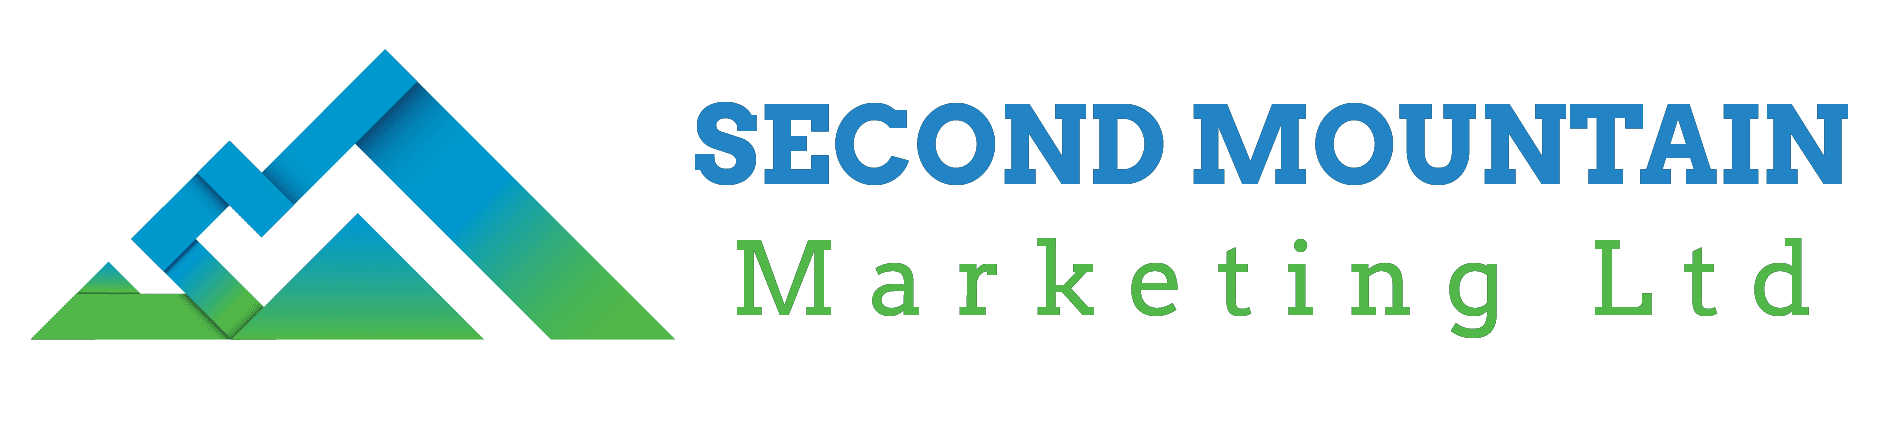 Second Mountain Marketing Ltd